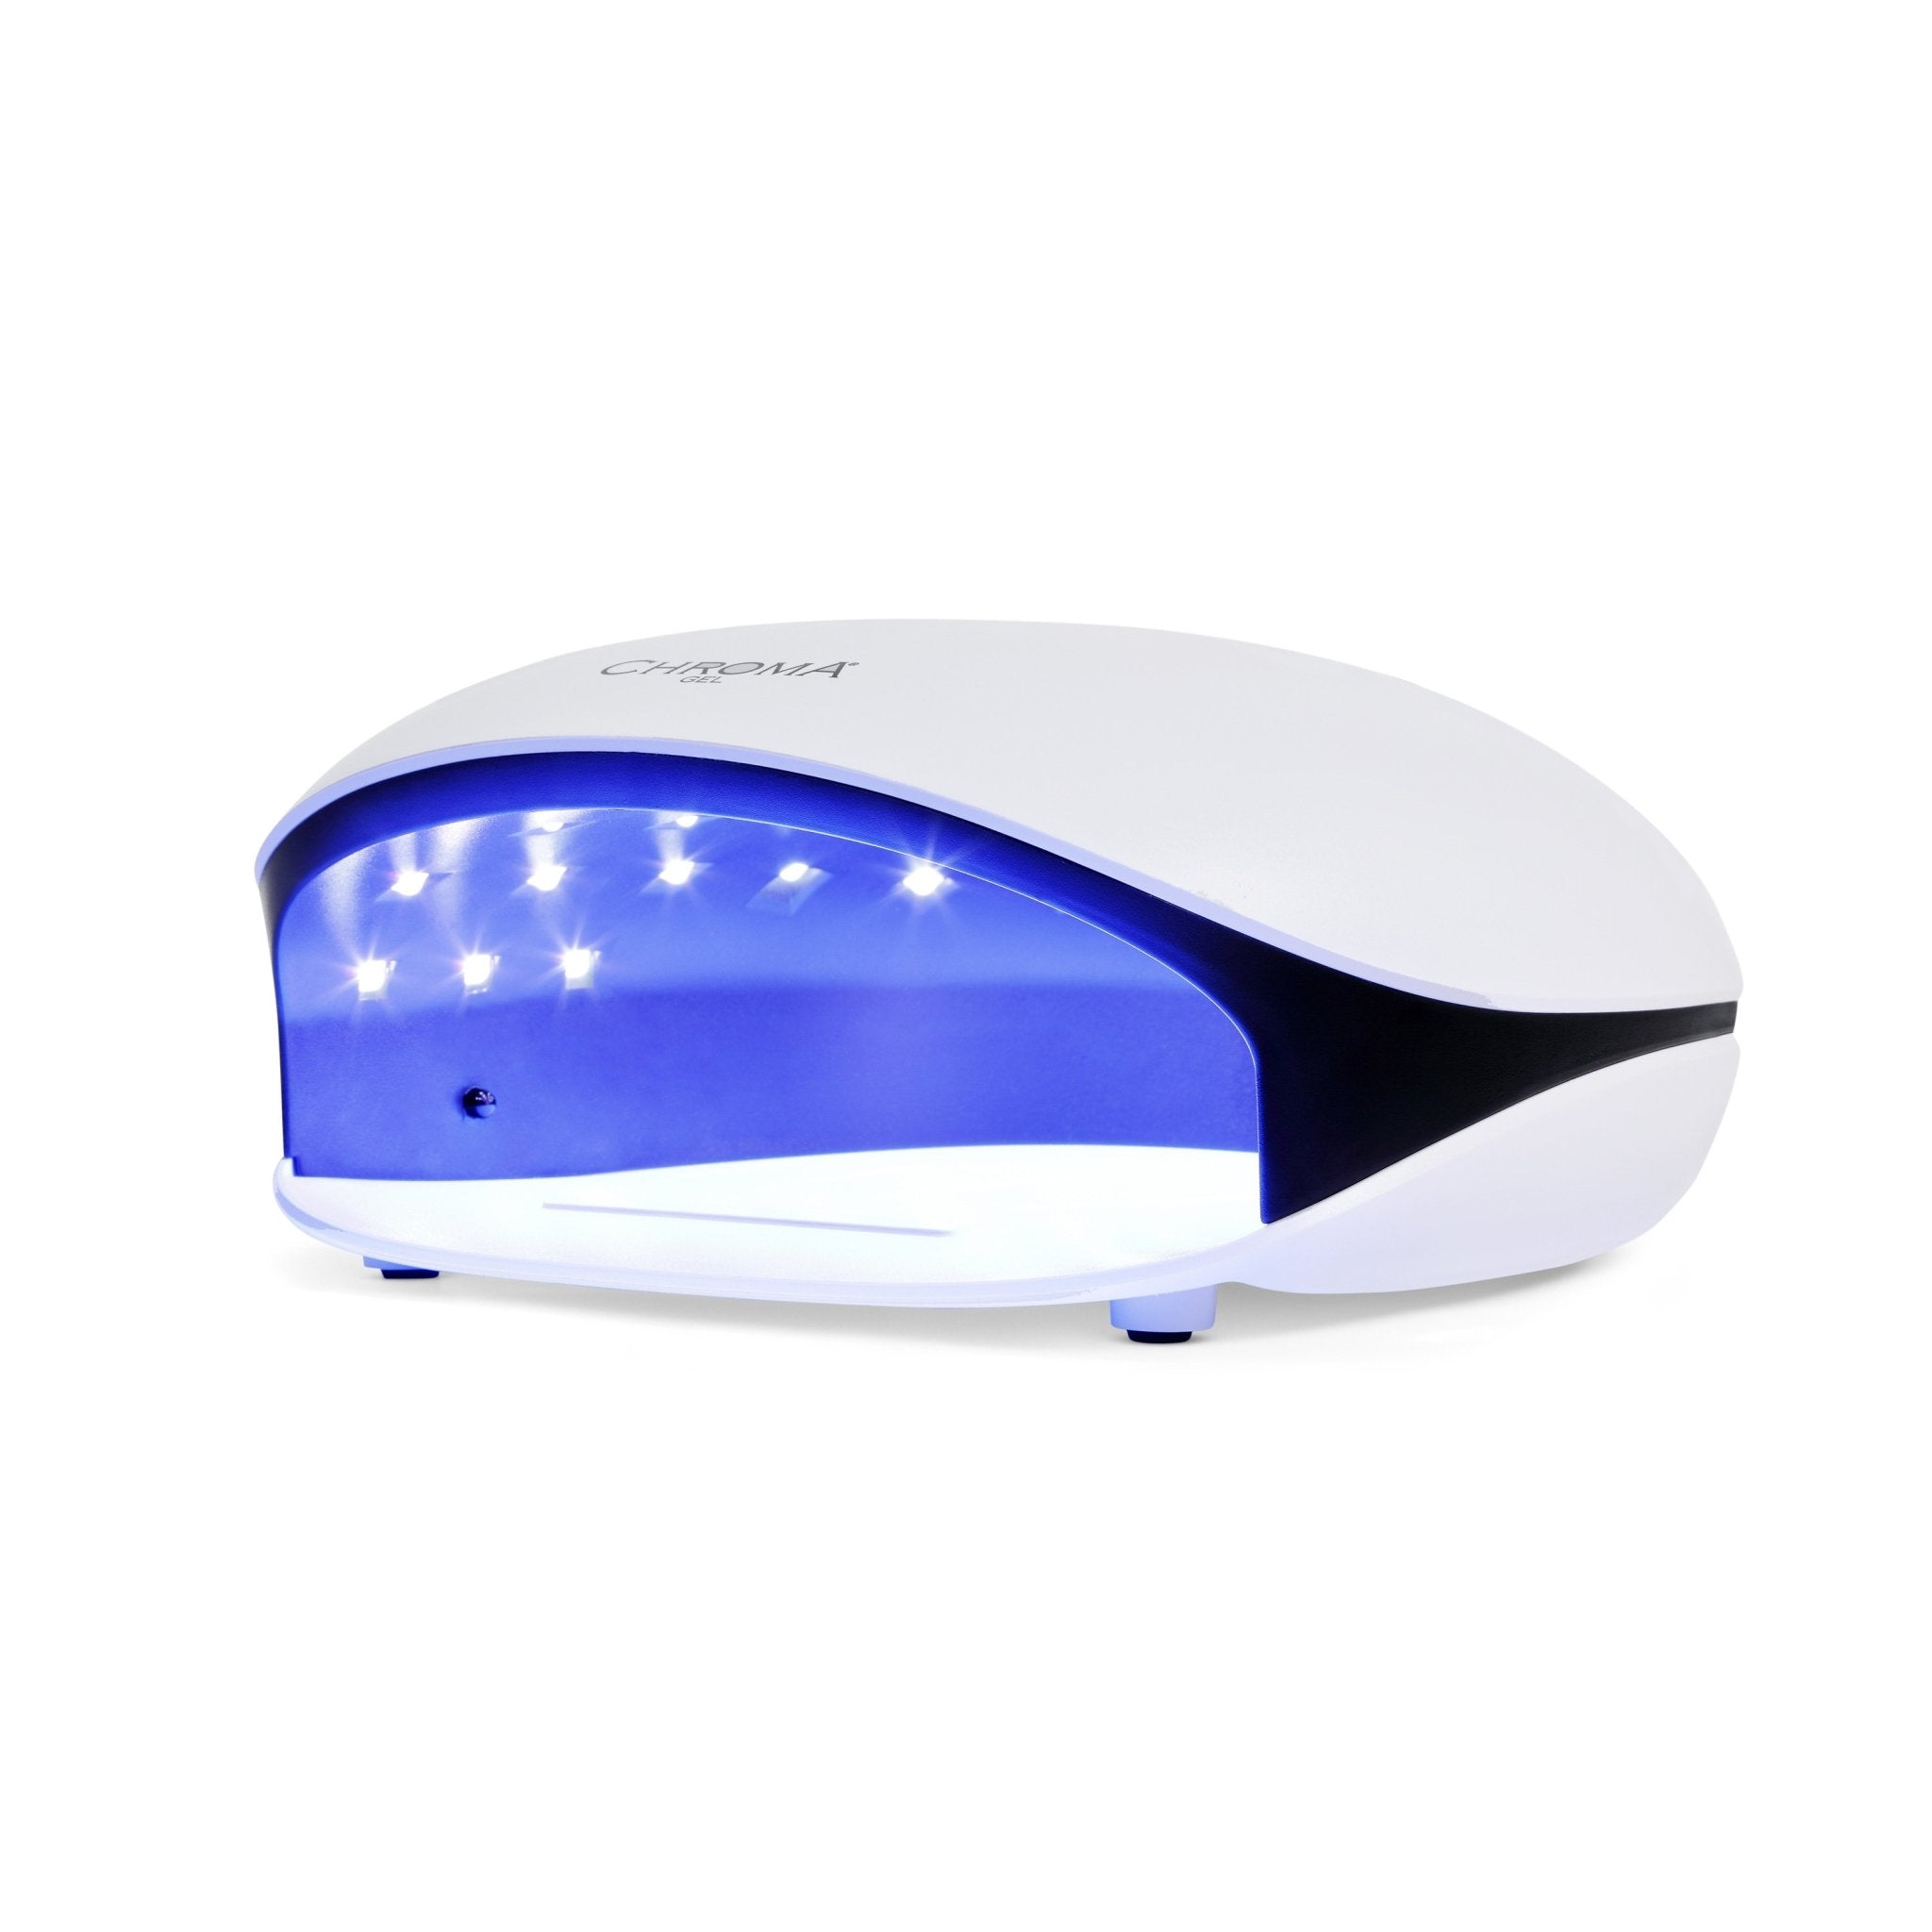 Professional 48W Smart Nail LED & UV Lamp for Gel Nail Polish - Beauty Hair Products Ltd